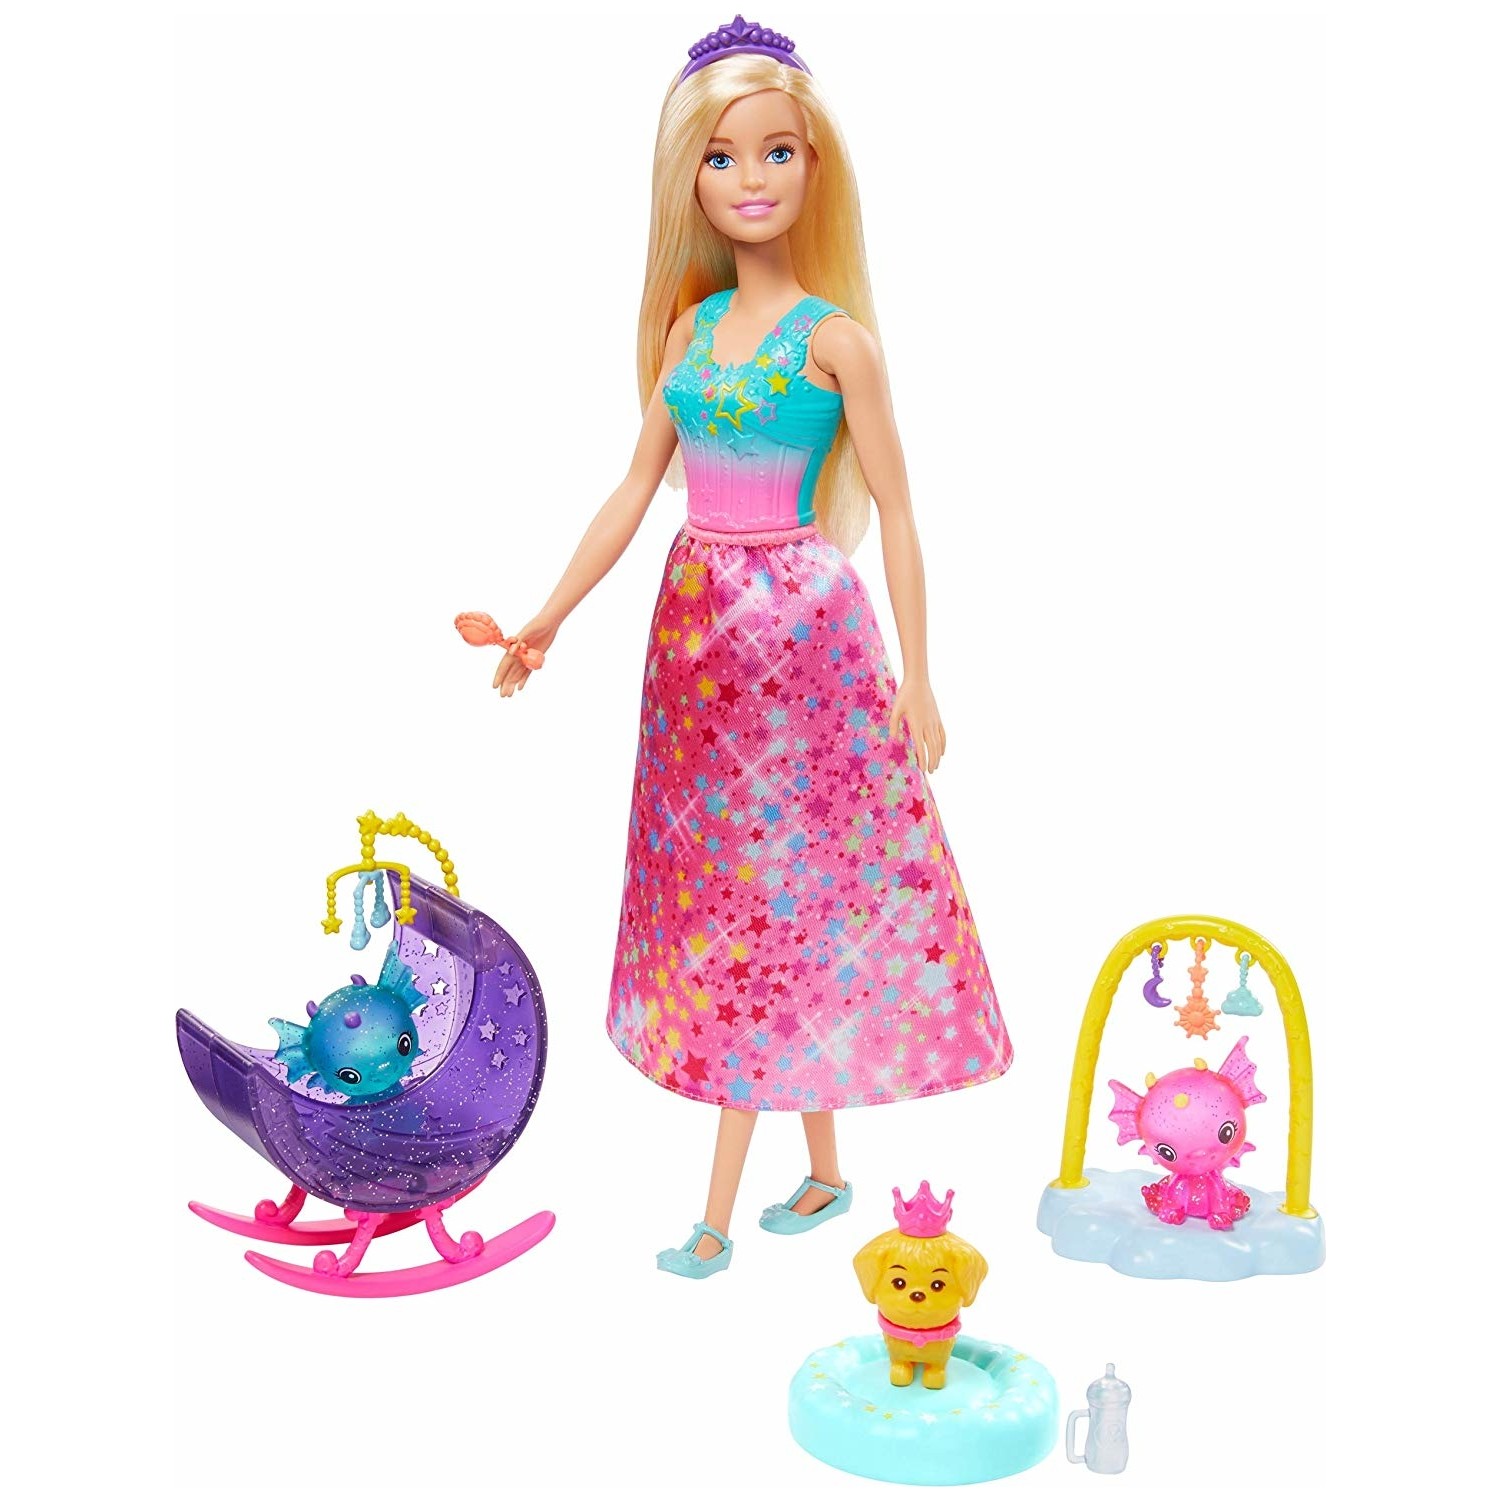 Кукла Barbie Dreamtopia Princess Doll and Accessories GJK51 barbie design set hair accessories